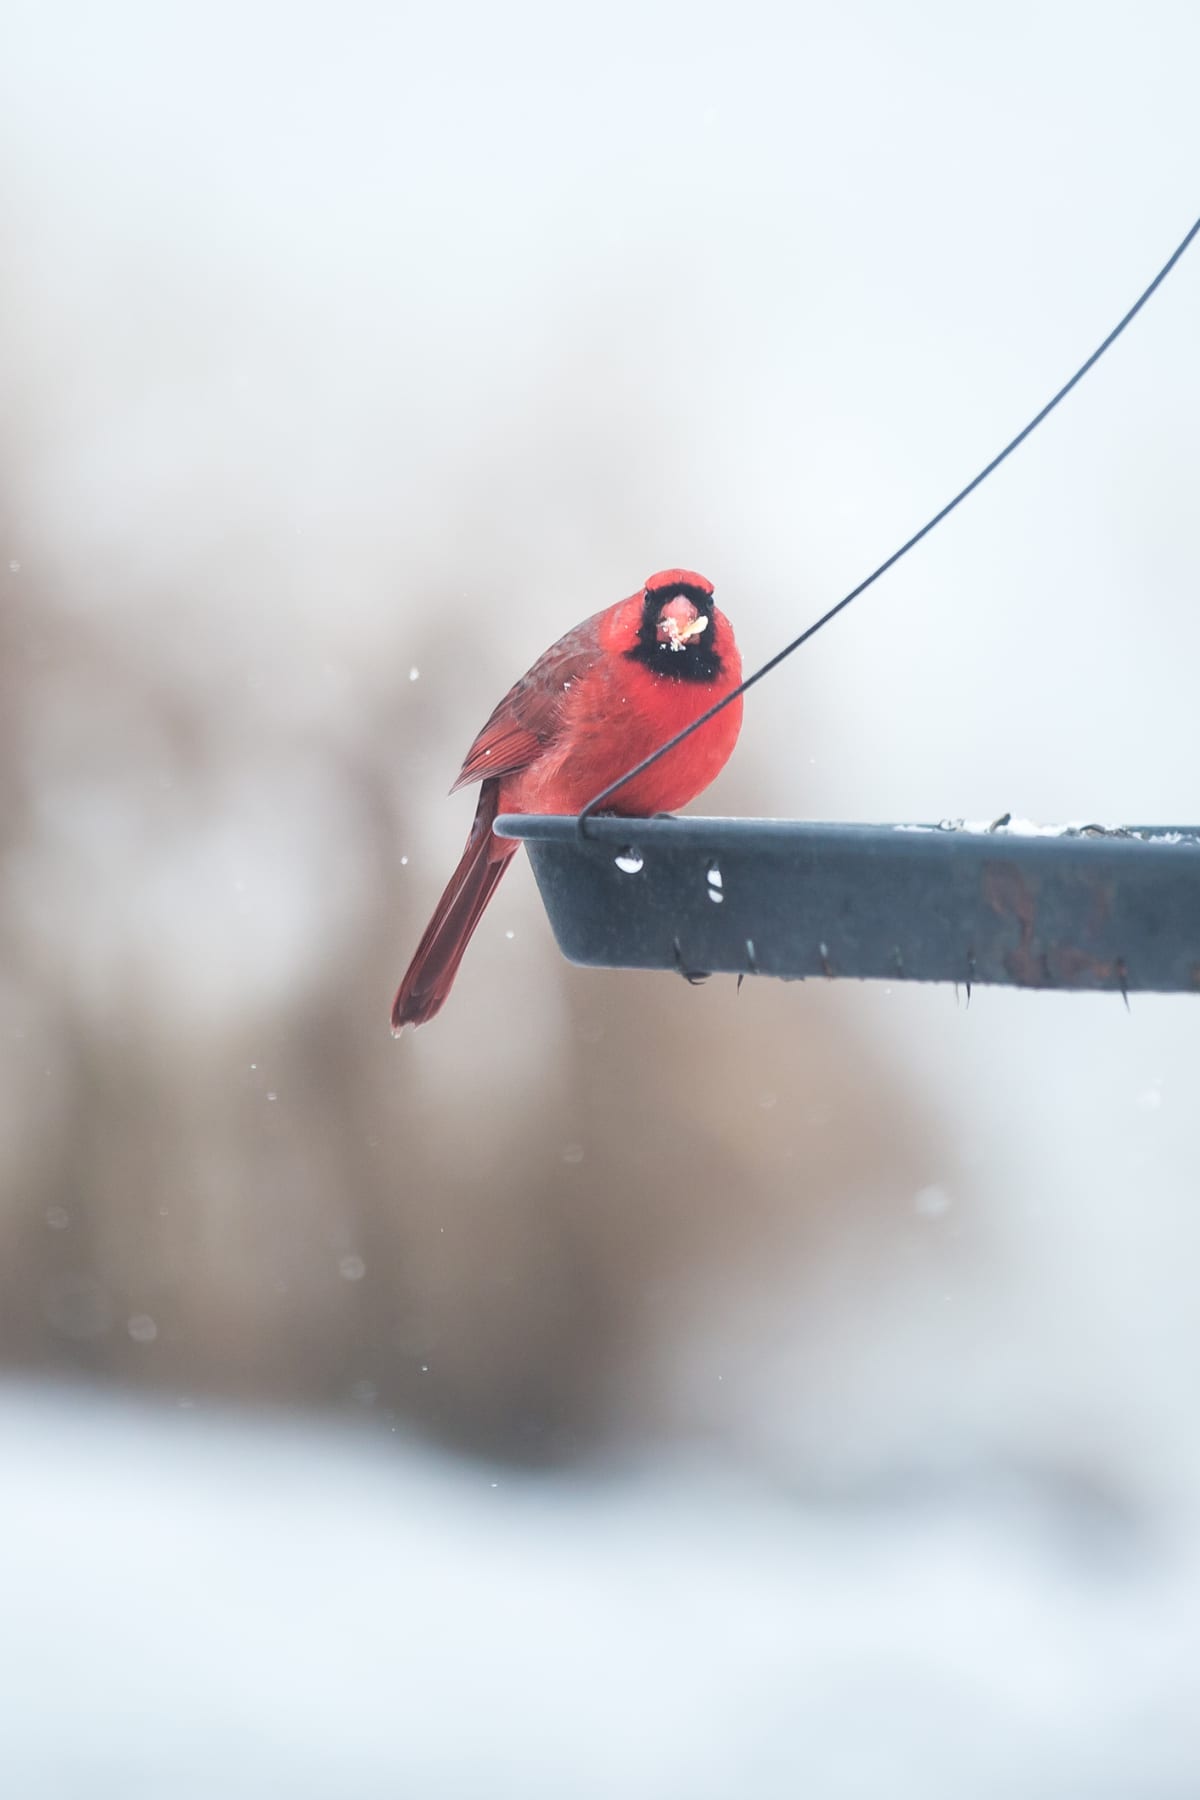 Bird eating from bird feeder in winter